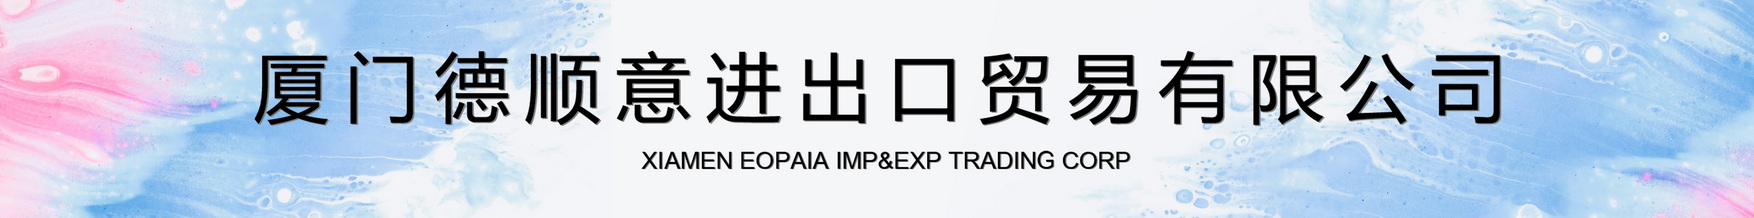 شيامن EOPAIA IMP & Exp Trading Corp